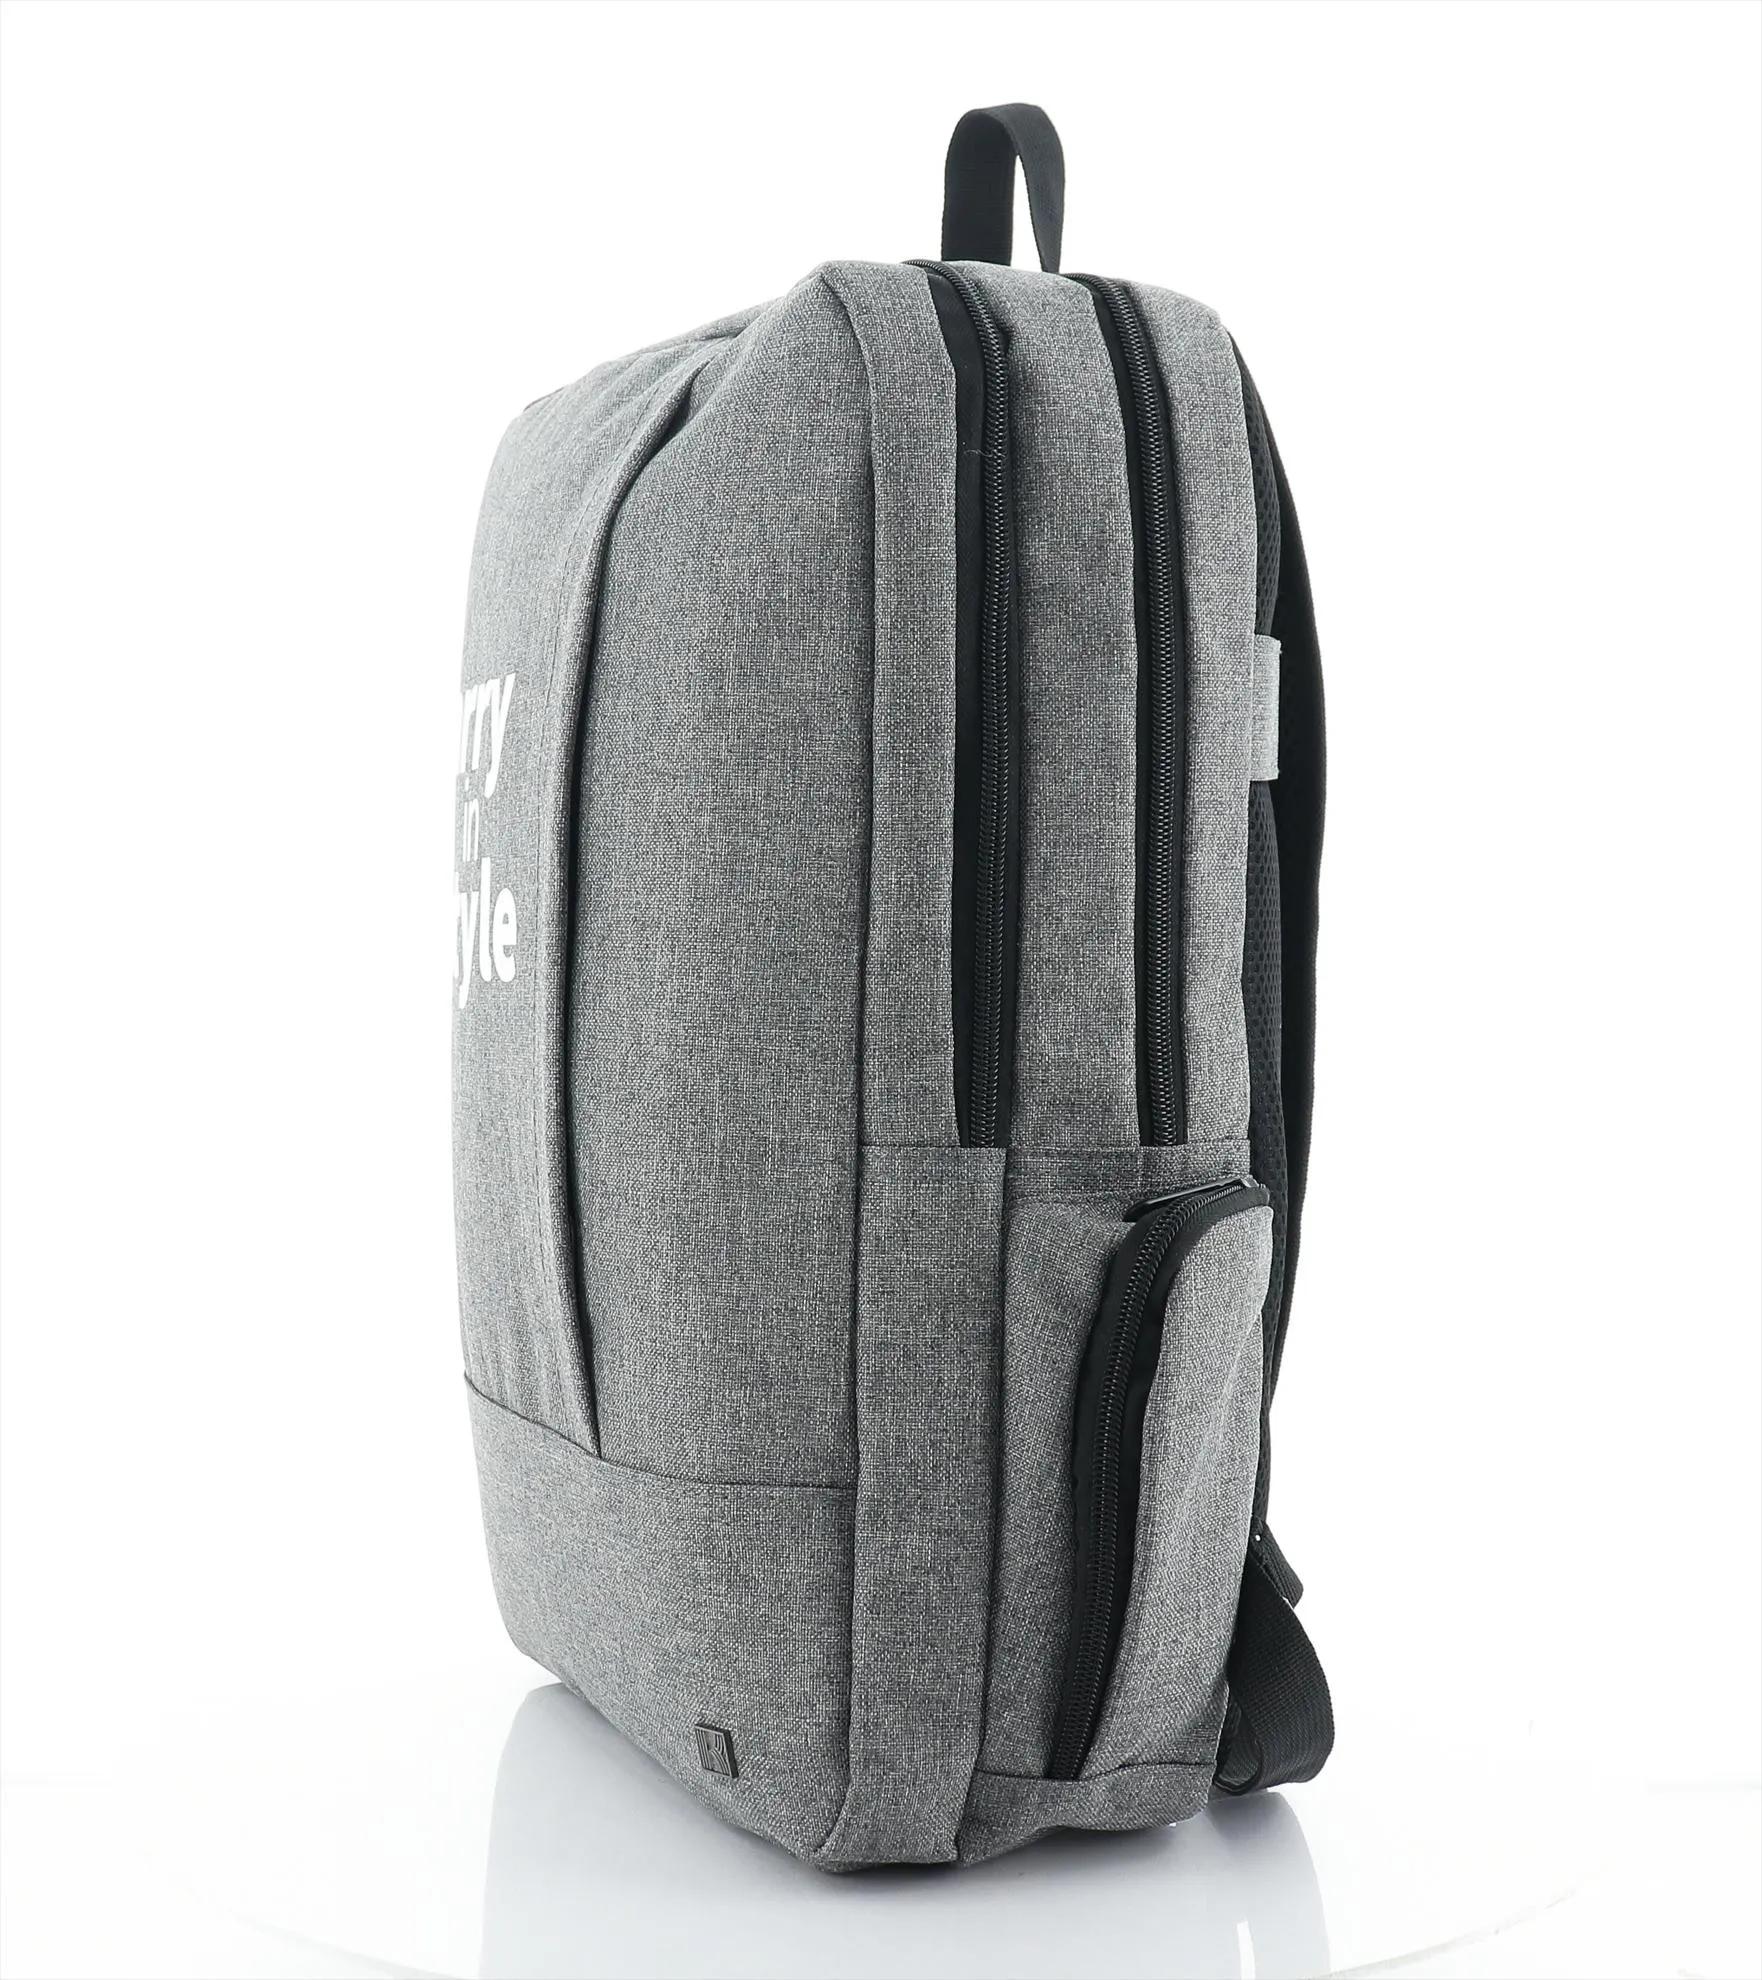 KAPSTON® Pierce Backpack 25 of 77